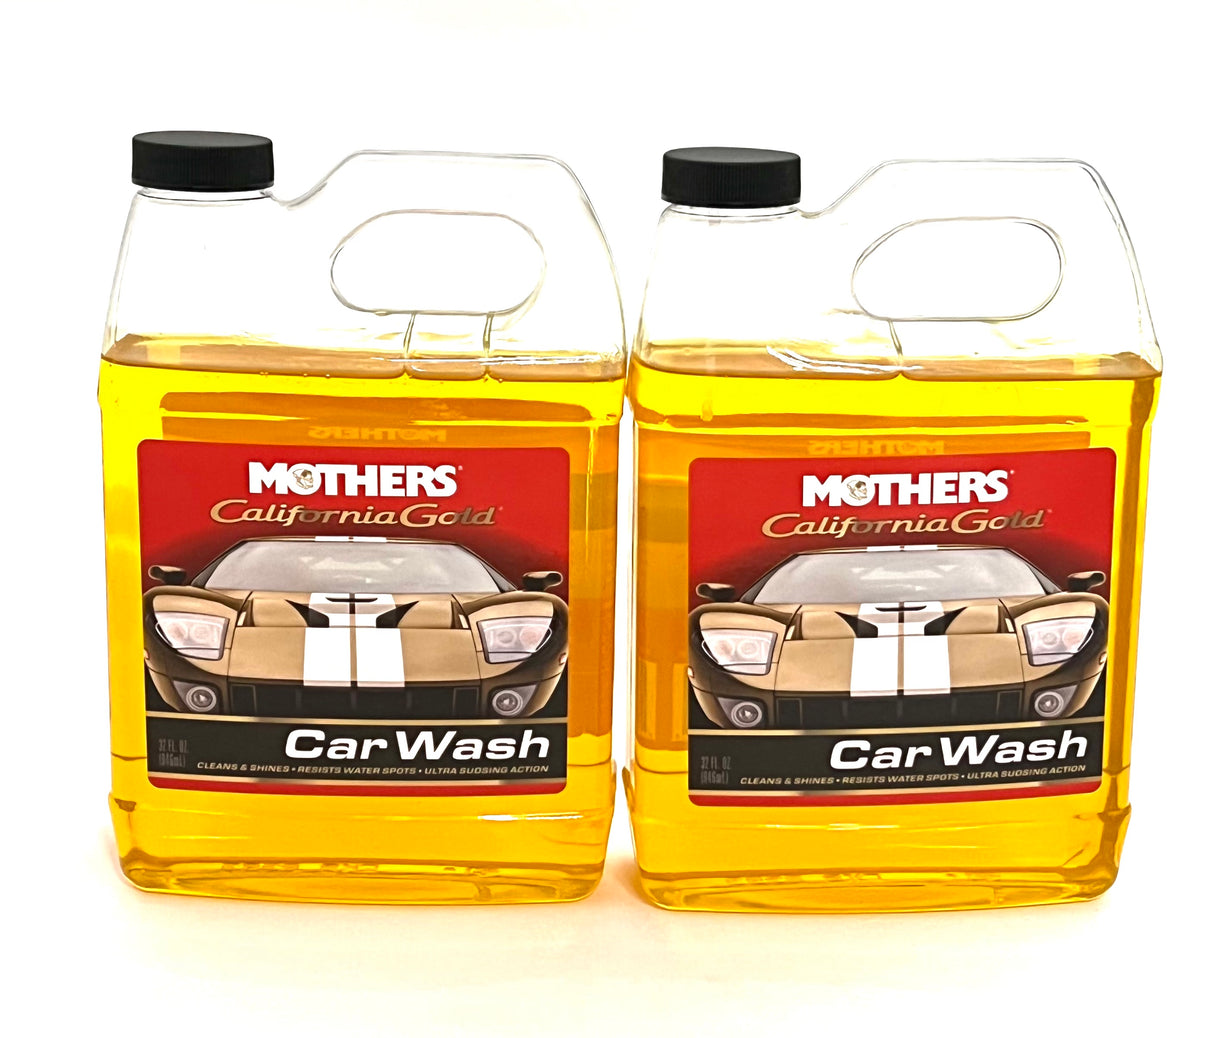 MOTHERS 05632 California Gold Car Wash -Resists water spots -pH balanced- 2 PACK